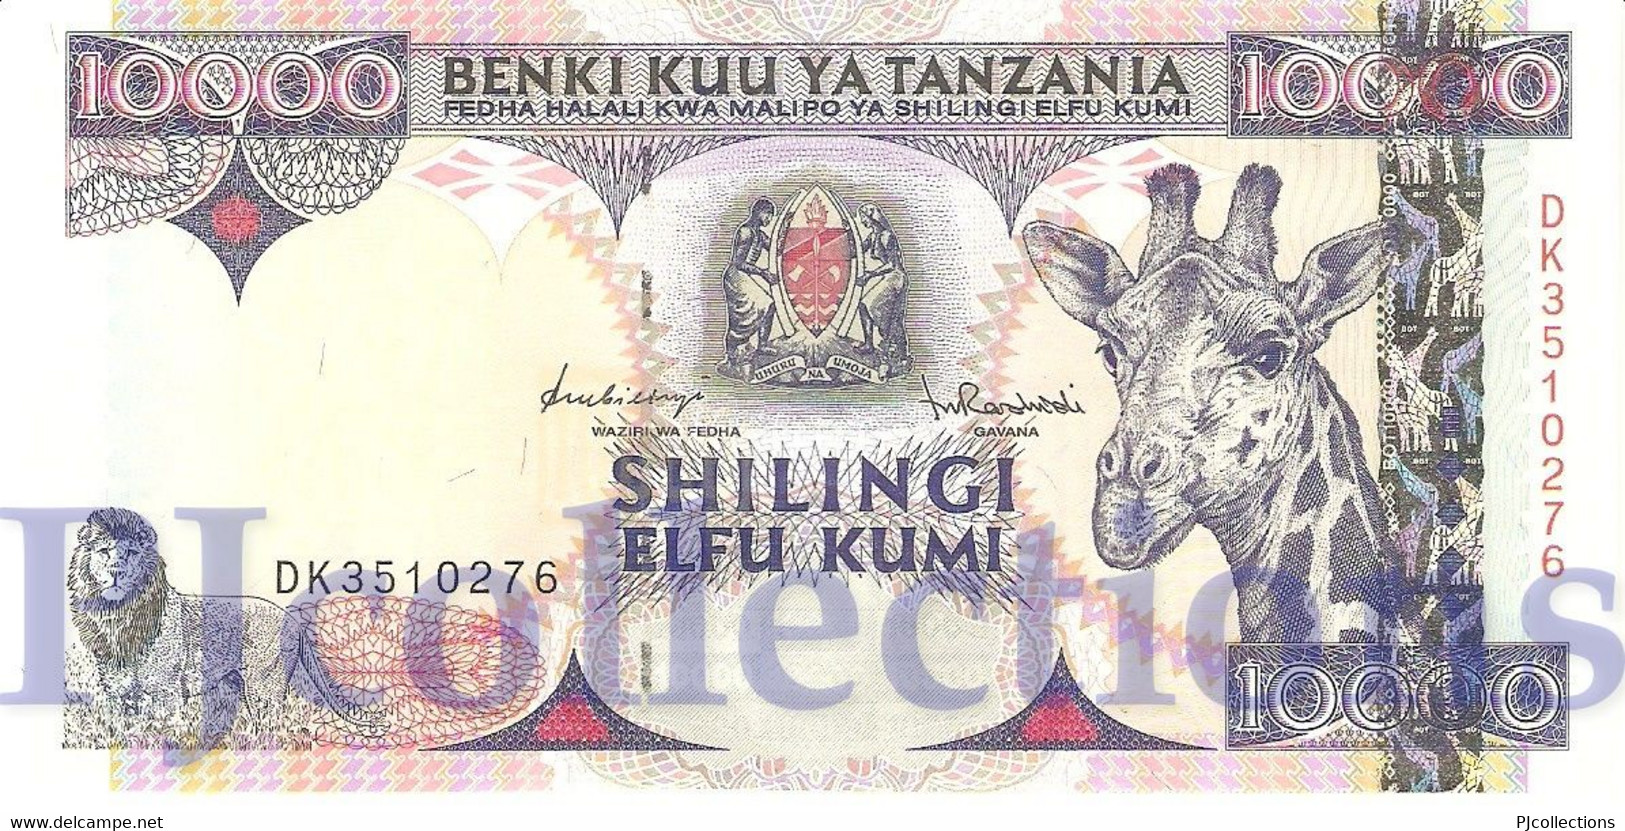 TANZANIA 10000 SHILINGI 1997 PICK 33 UNC - Tanzania